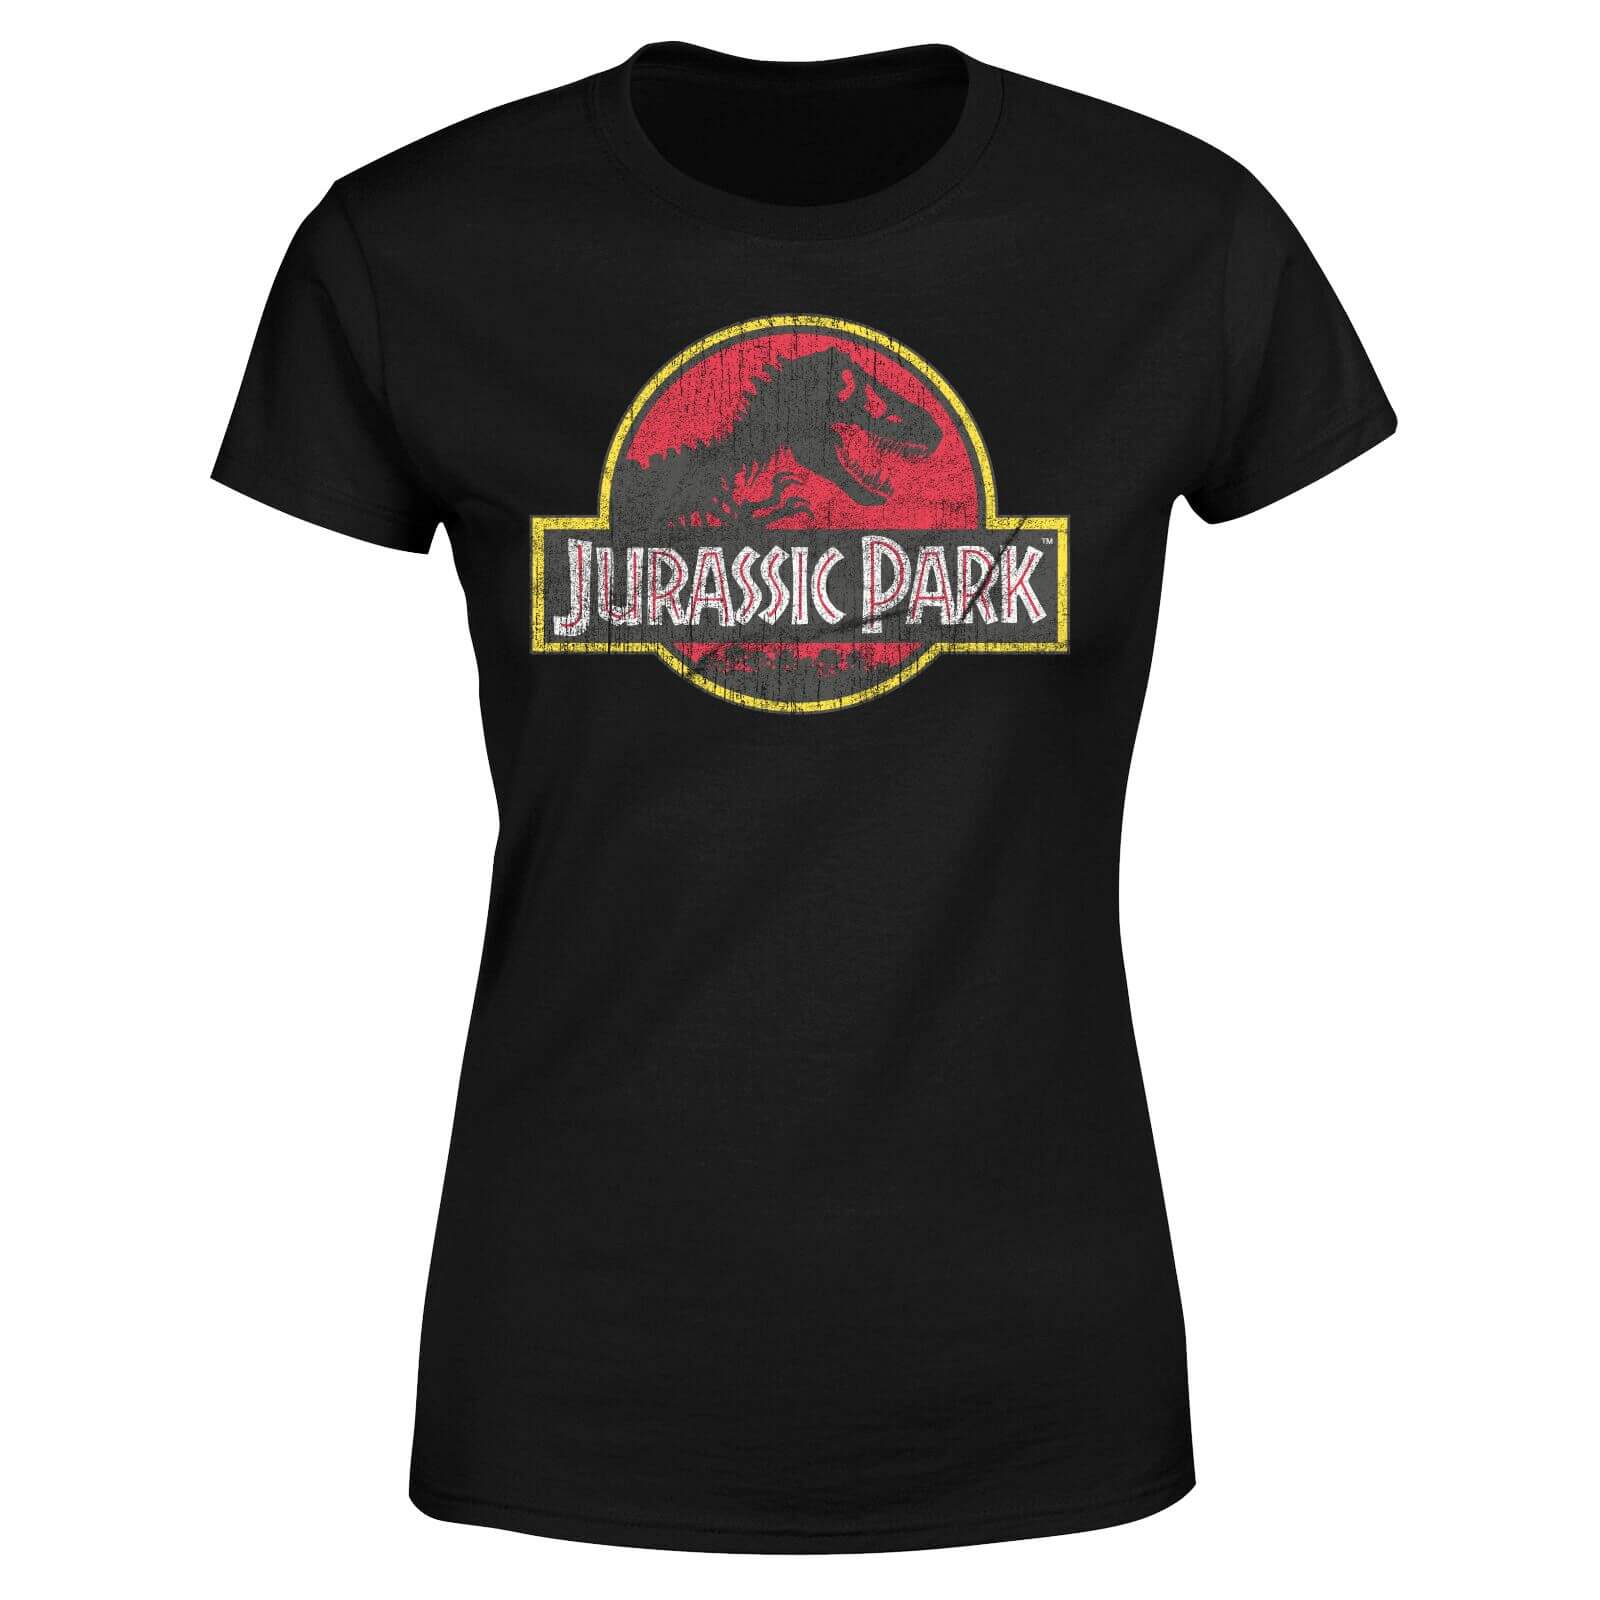 Jurassic Park Logo Vintage Women's T-Shirt - Black - XXL - Black